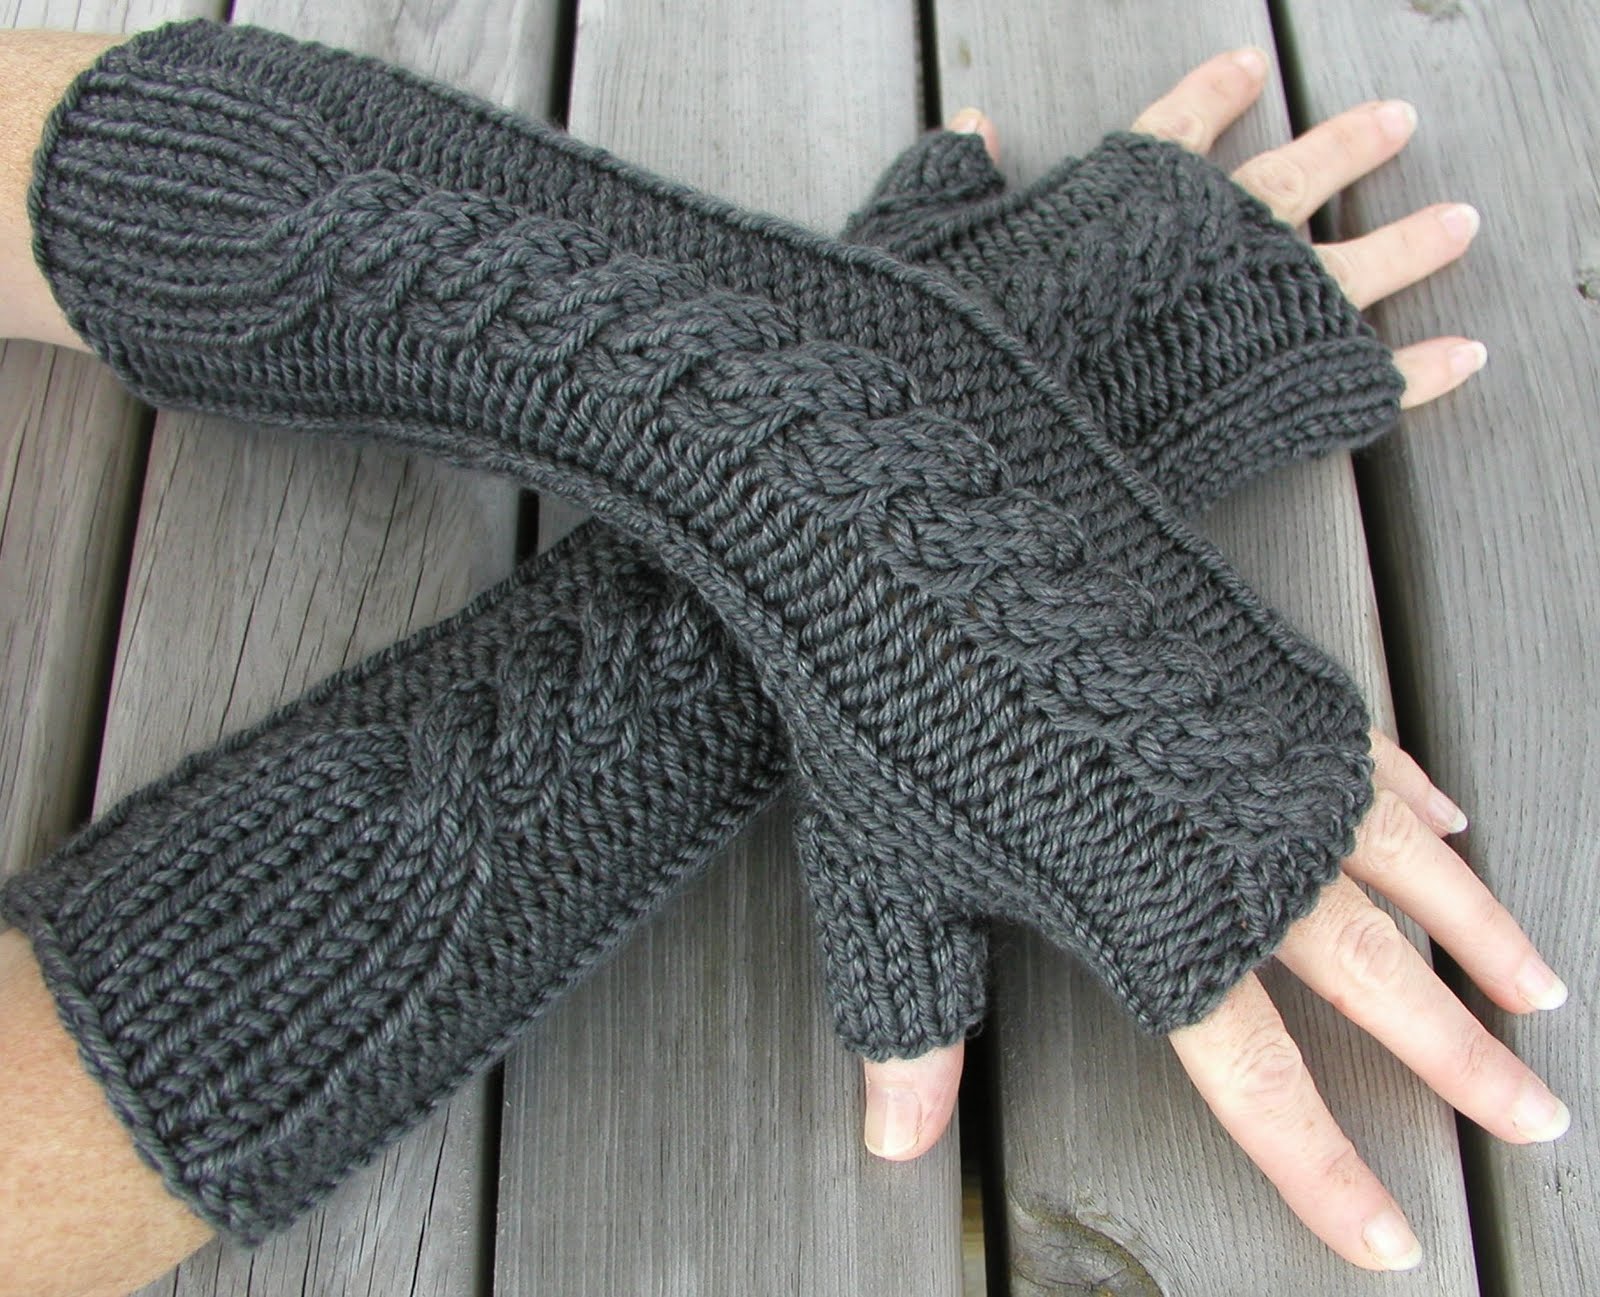 Knitting Pattern Central - Free Fingerless Mittens Knitting